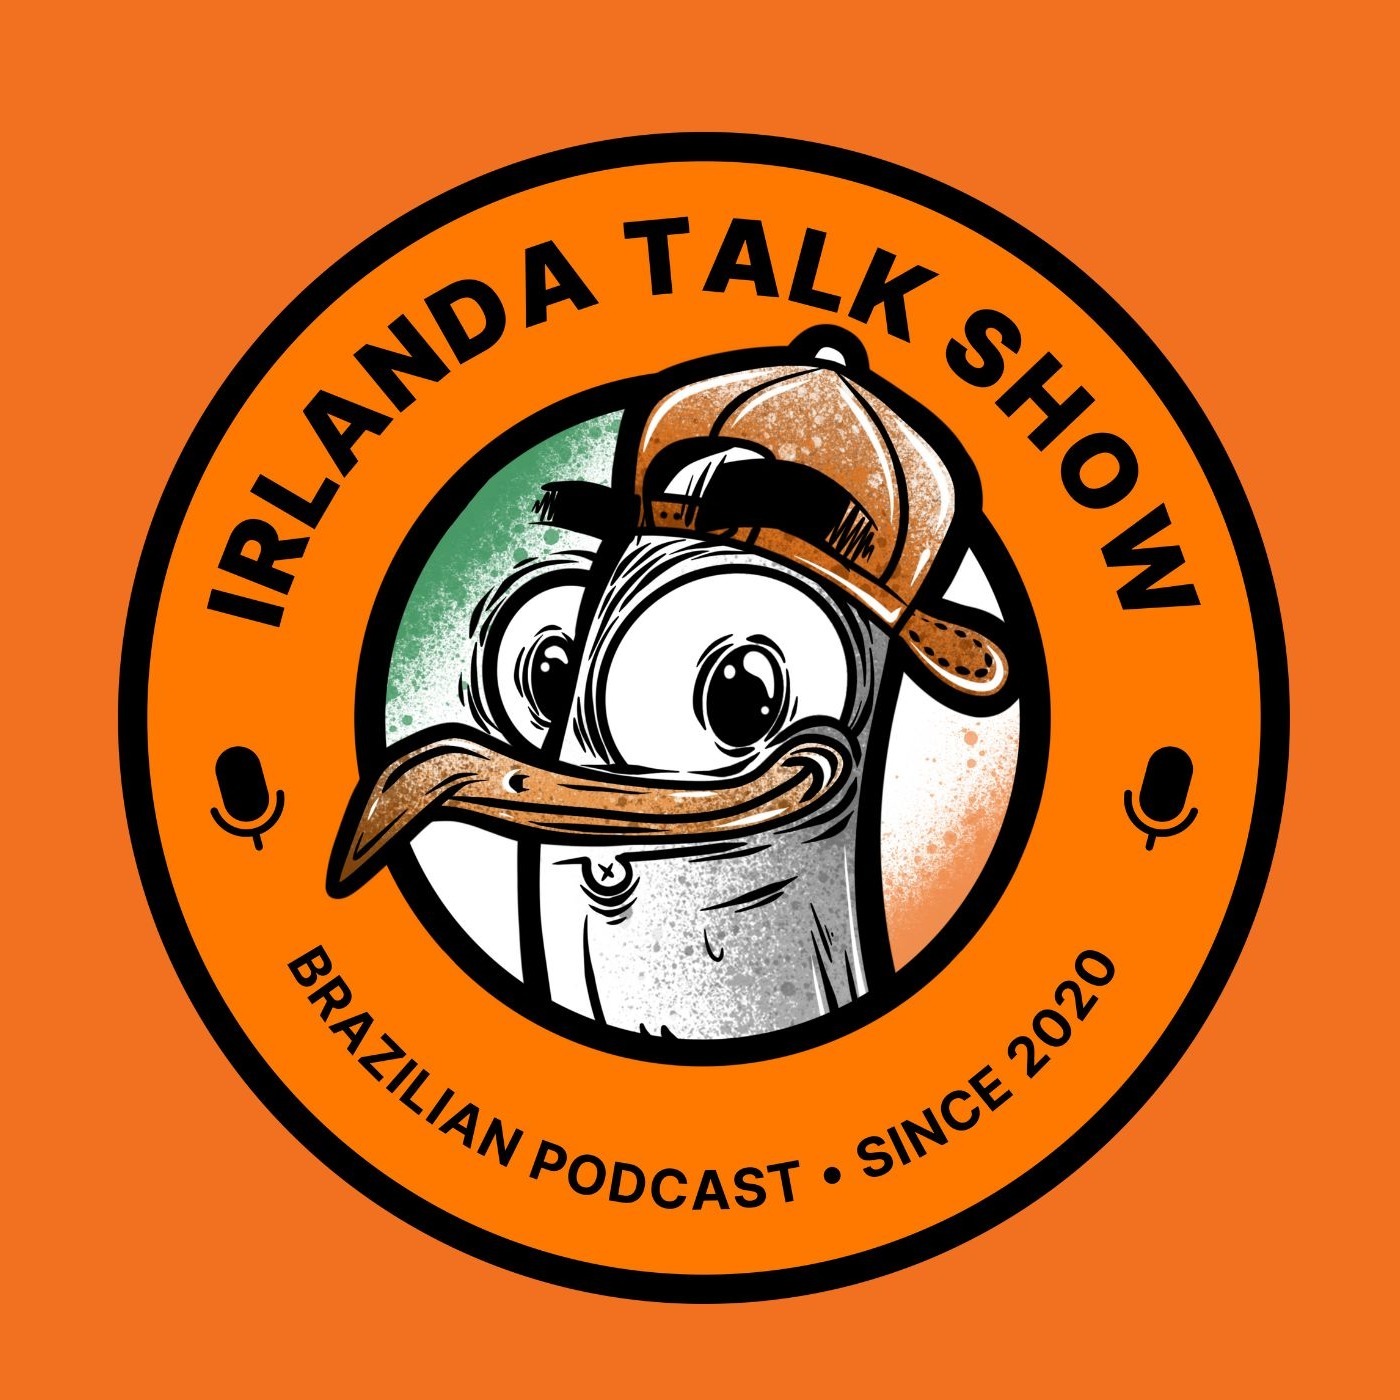 Irlanda Talk Show Podcast